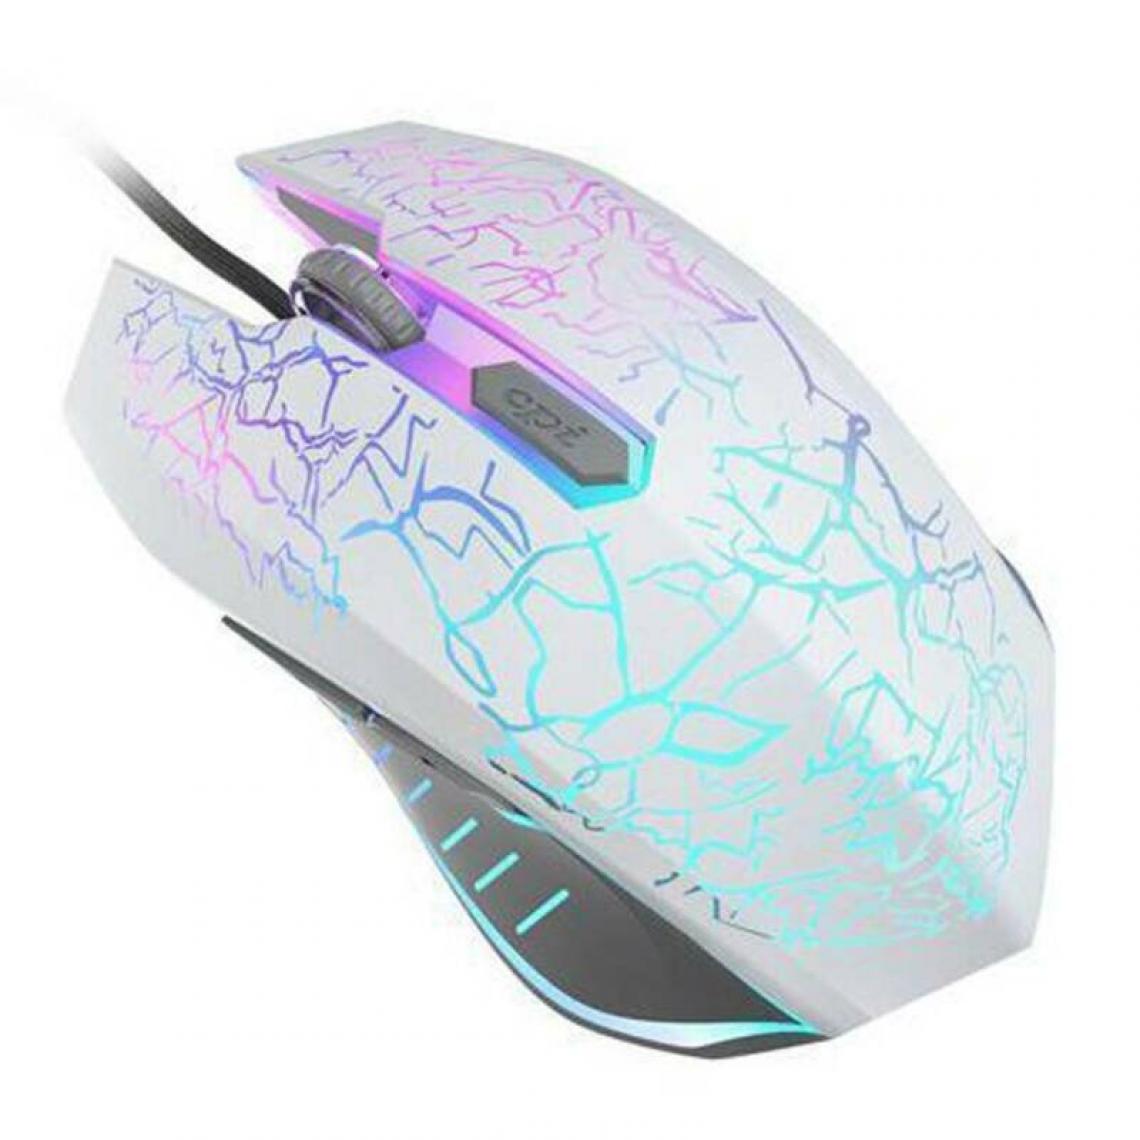 Universal - (White) Gaming Mouse Wired 800,1200,1600,2400 DPI Ergonomic Gamer Mice LED Backlit PC - Souris